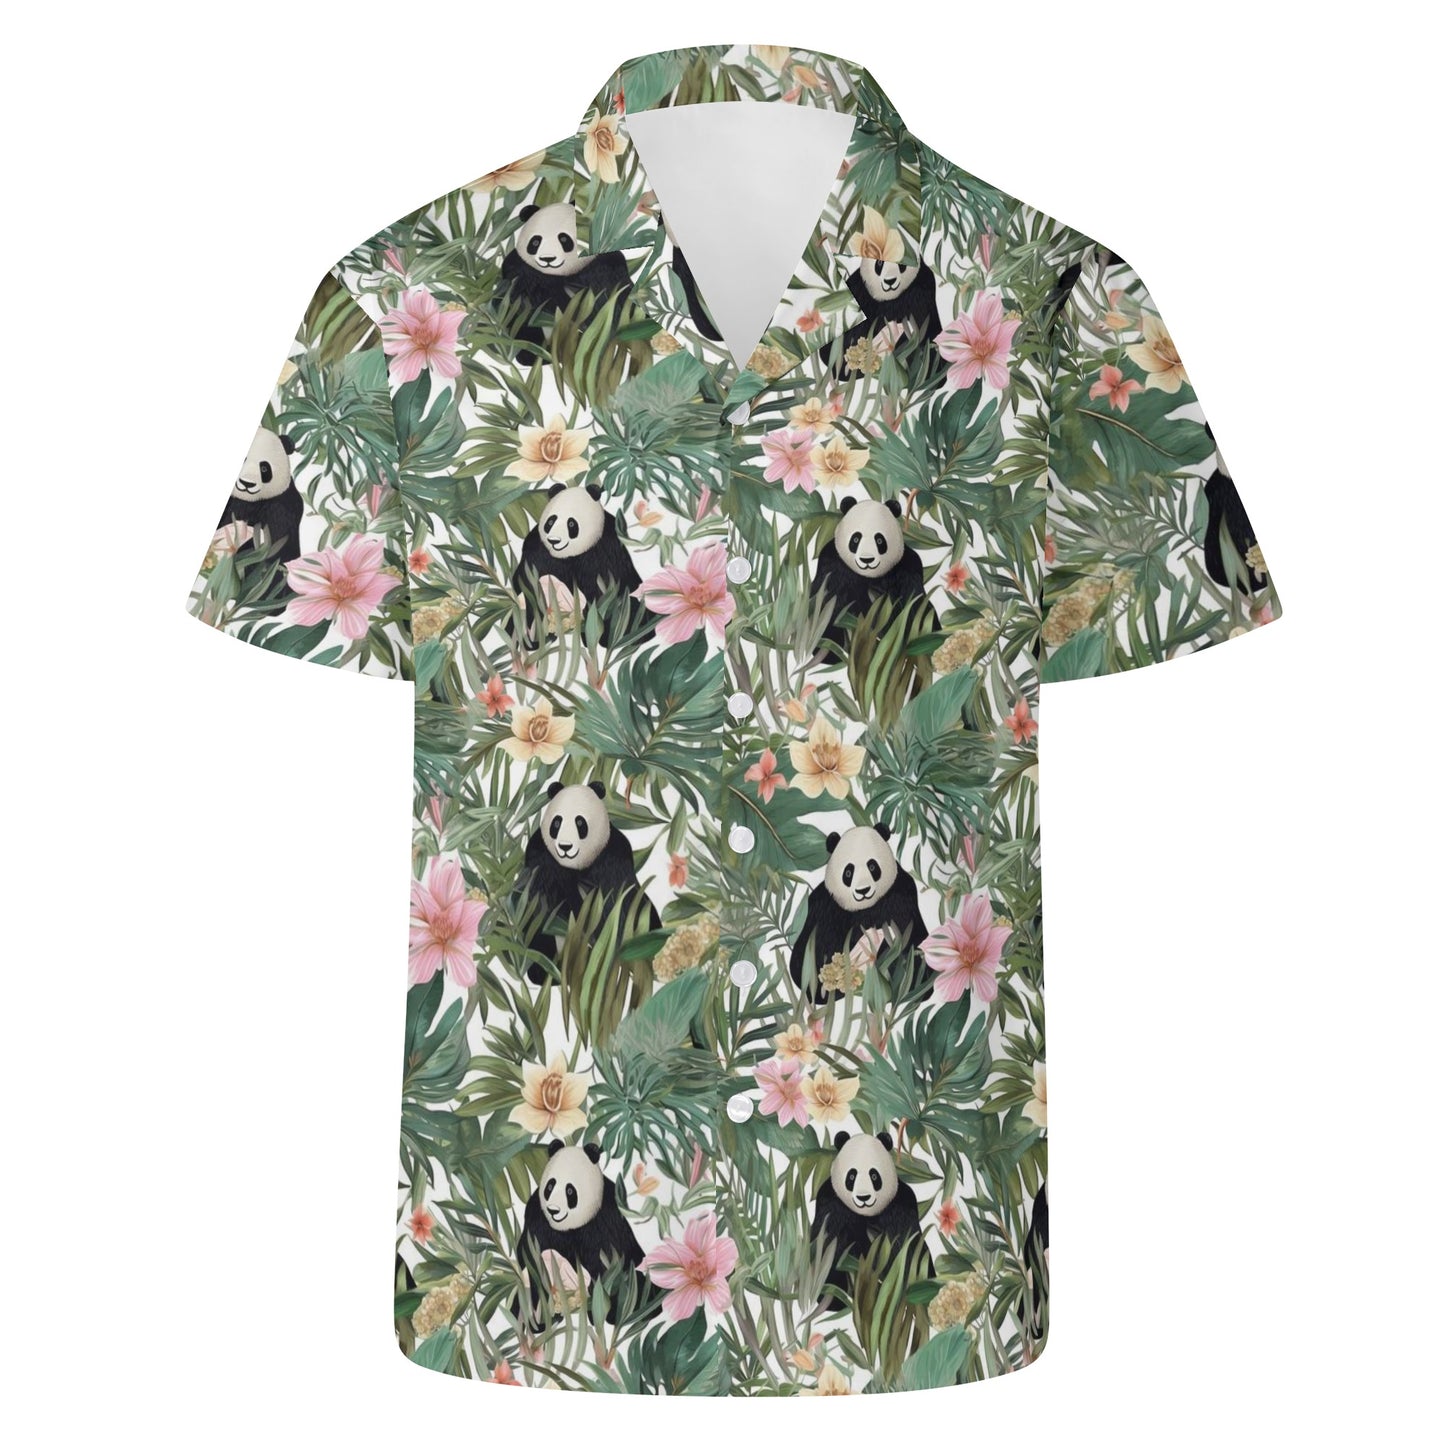 Panda Men Hawaiian shirt, Bamboo Leaves Flowers Print Vintage Retro Summer Hawaii Aloha Tropical Beach Plus Size Cool Button Up Shirt Starcove Fashion